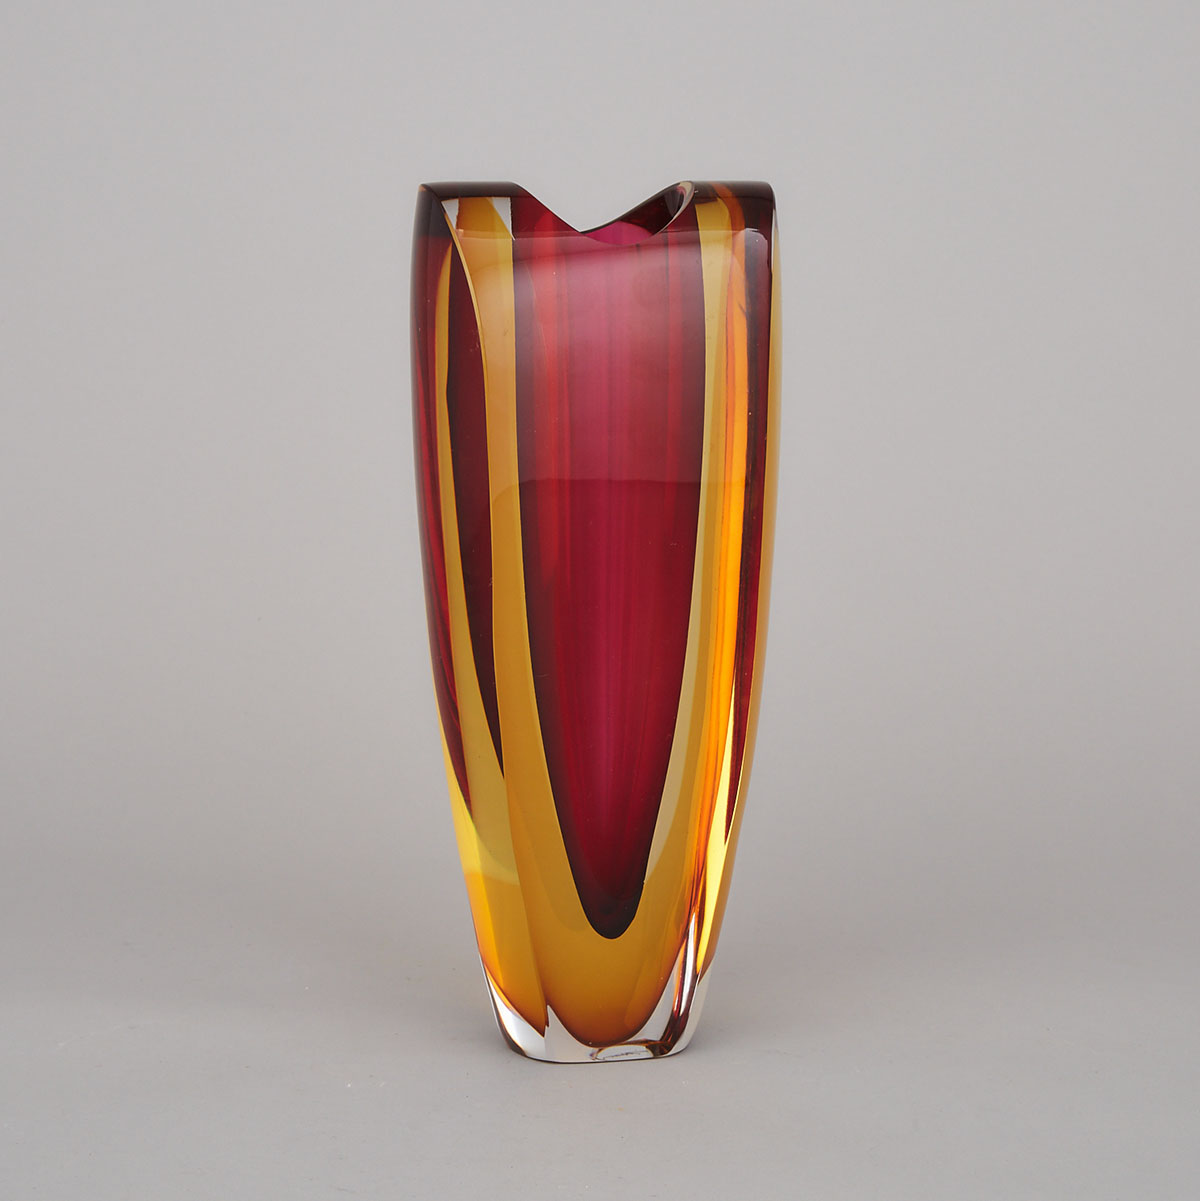 Kosta Boda, 'Unique' Red and Amber Glass Vase, Goran Warff, c.2000